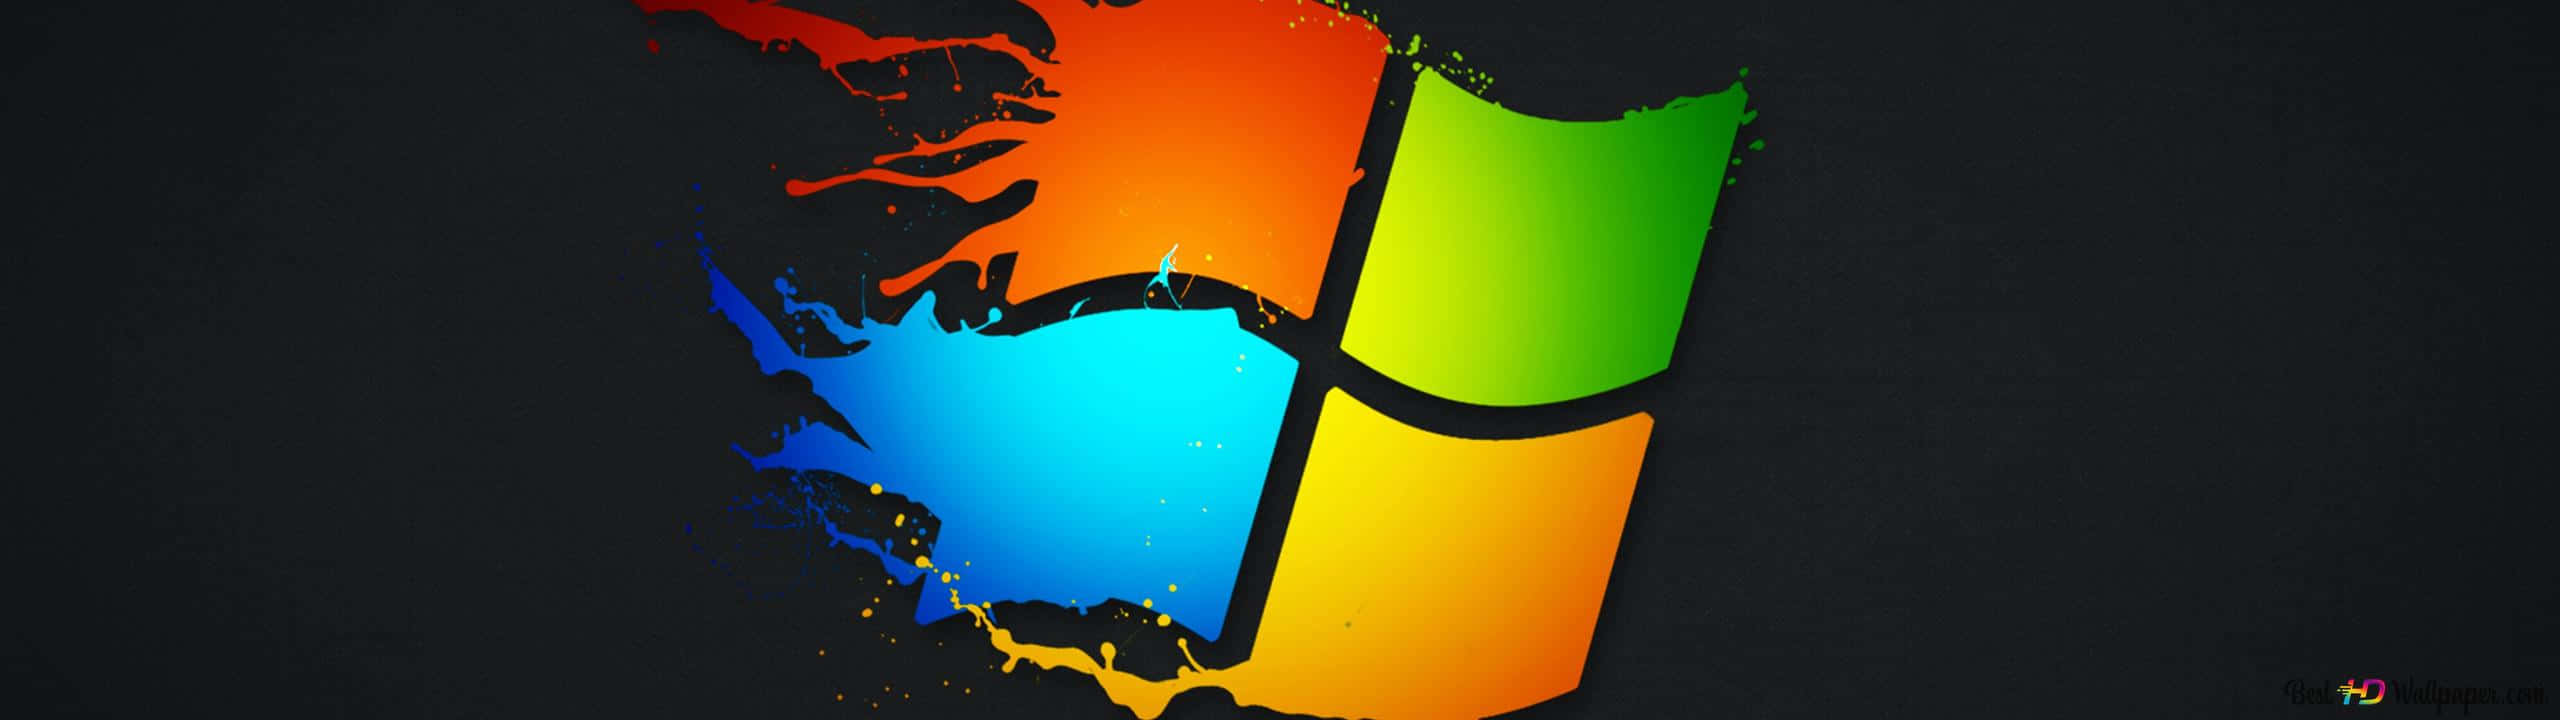 Logodi Microsoft Windows Xp Sfondo